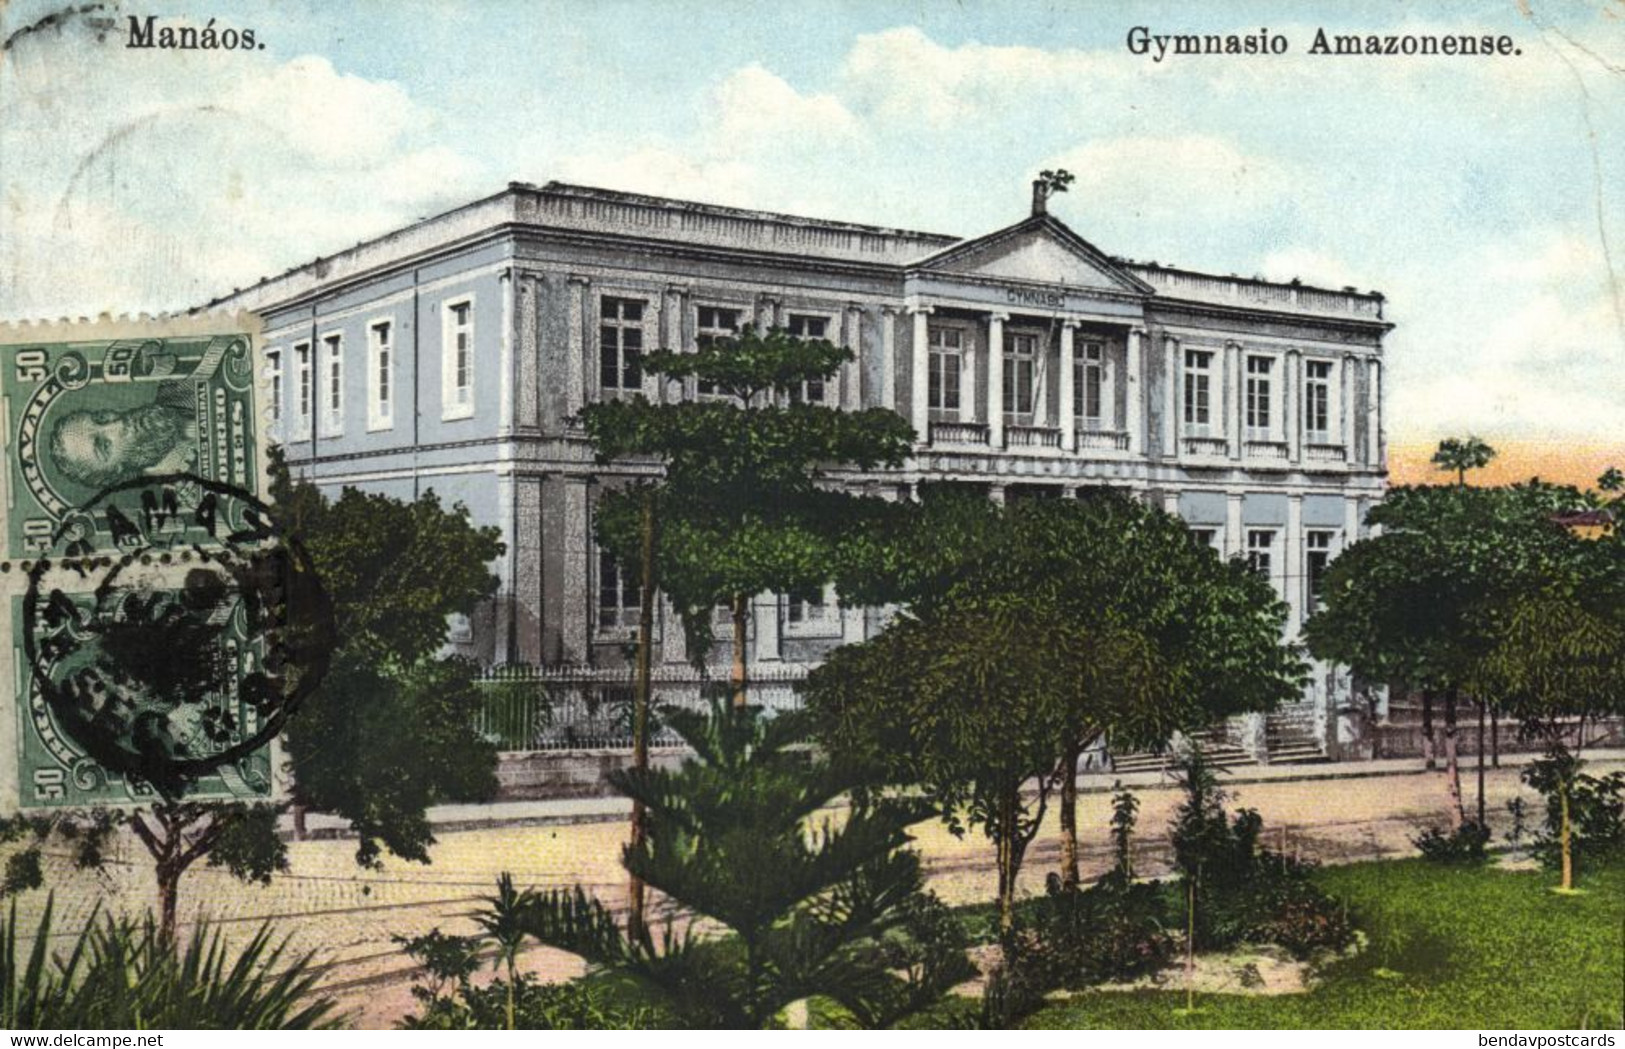 Brazil, MANAOS MANAUS, Gymnasio Amazonense (1913) Postcard - Manaus